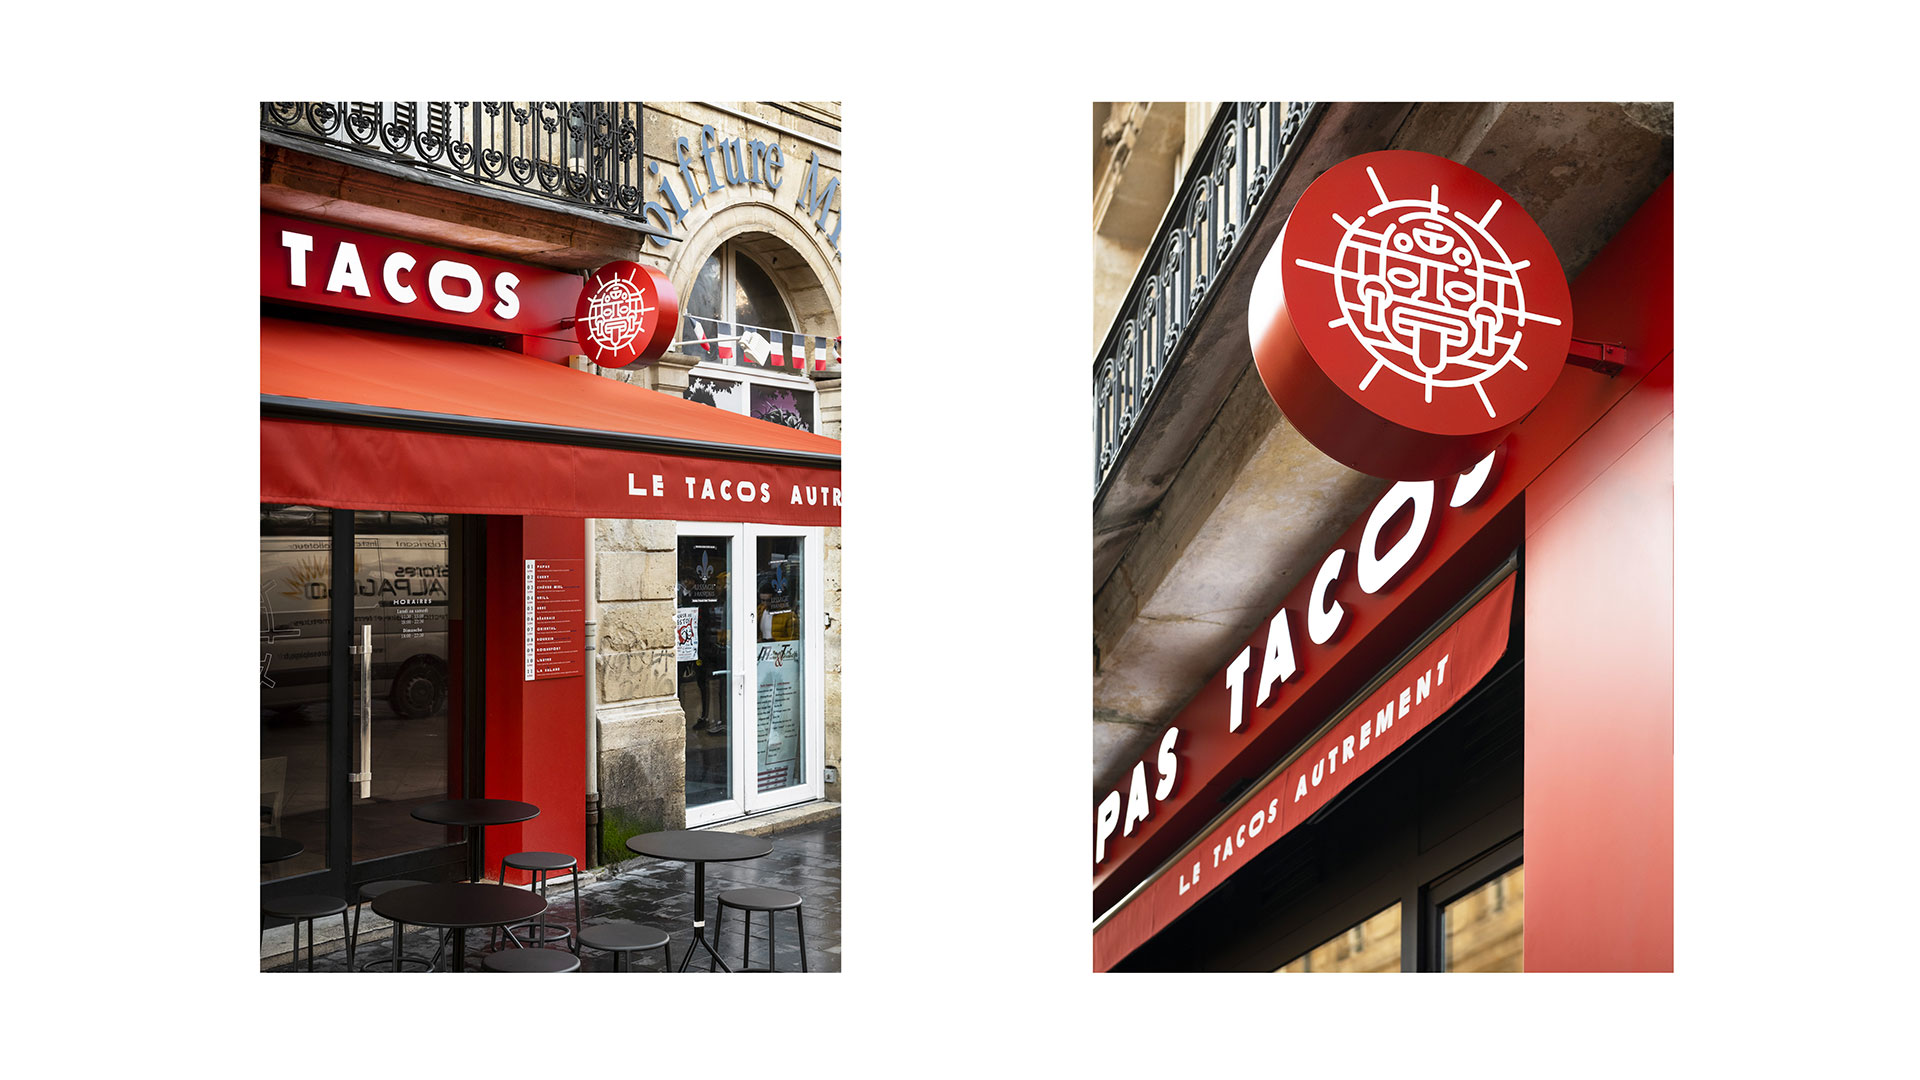 Papas Tacos - restaurant - Bordeaux - identity - neon sign - flag sign - facade - blind